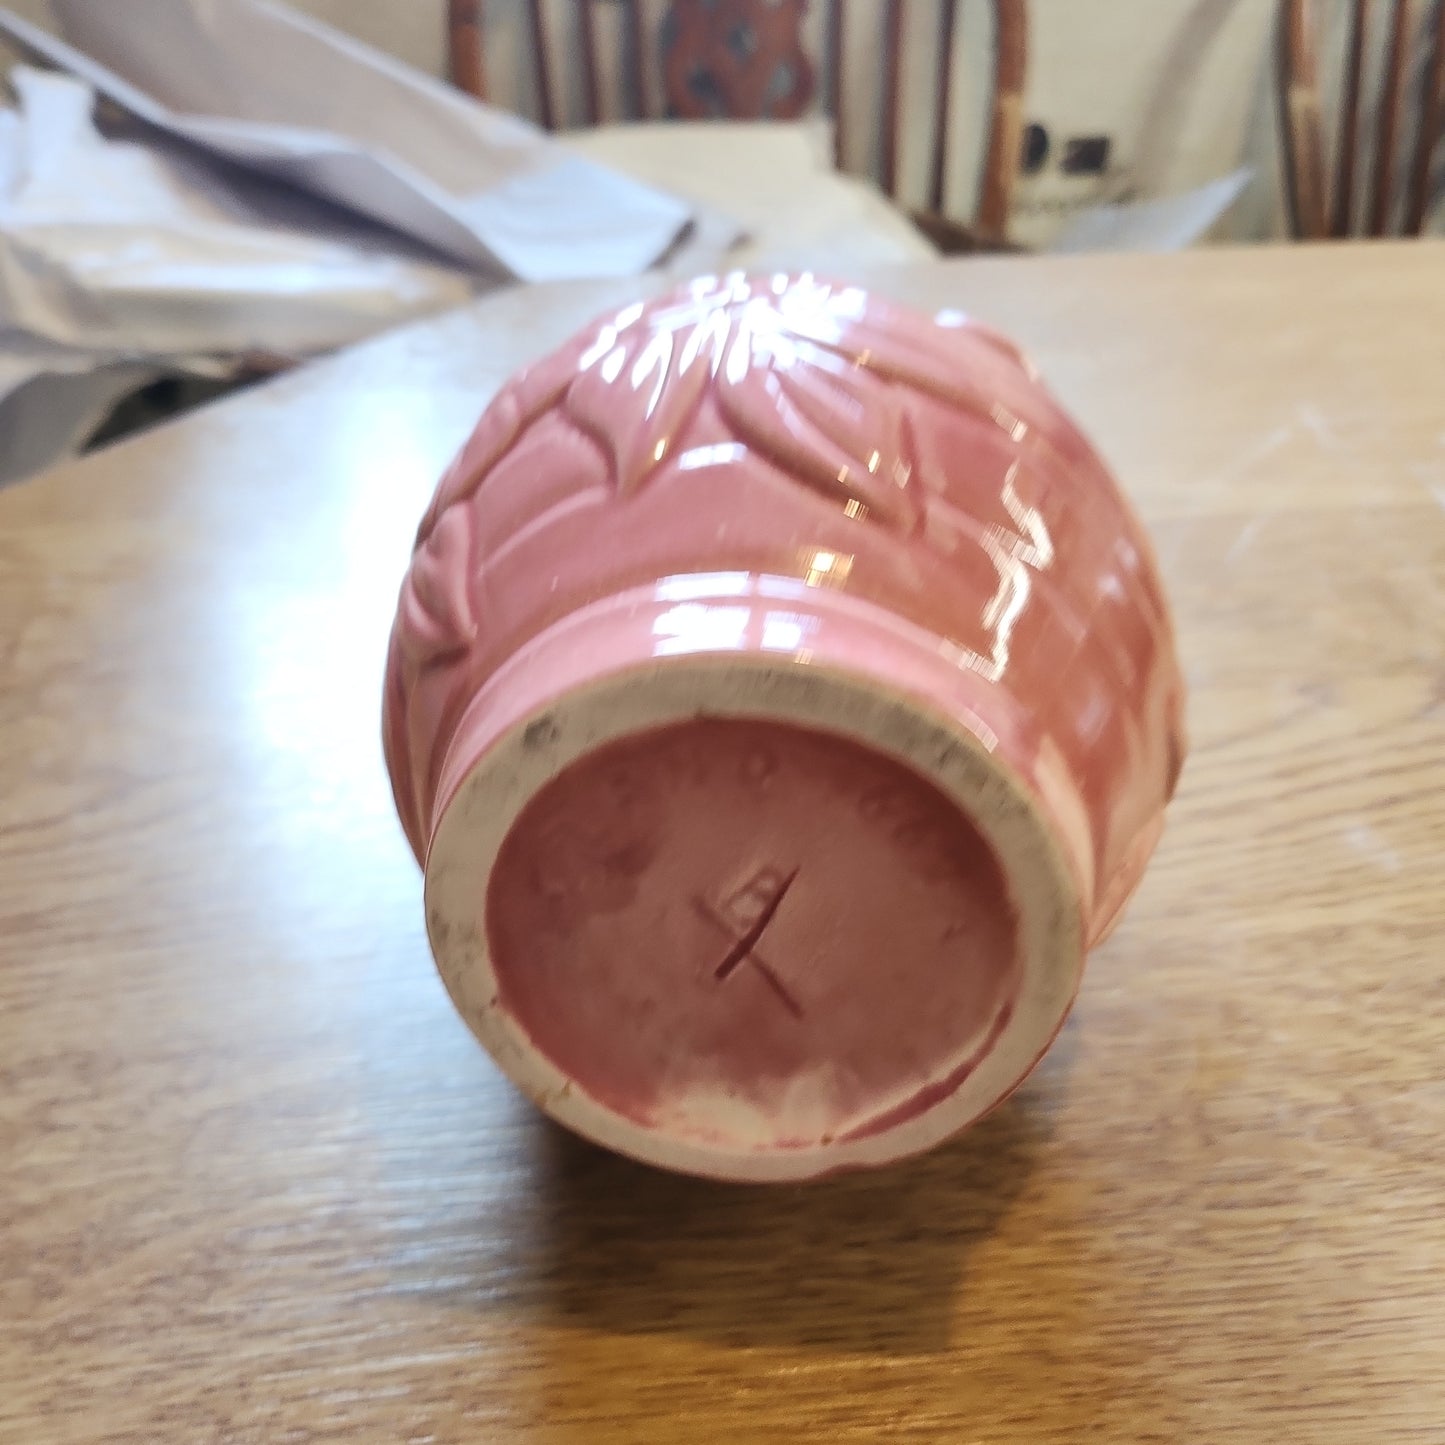 Vintage pink studio pottery jug